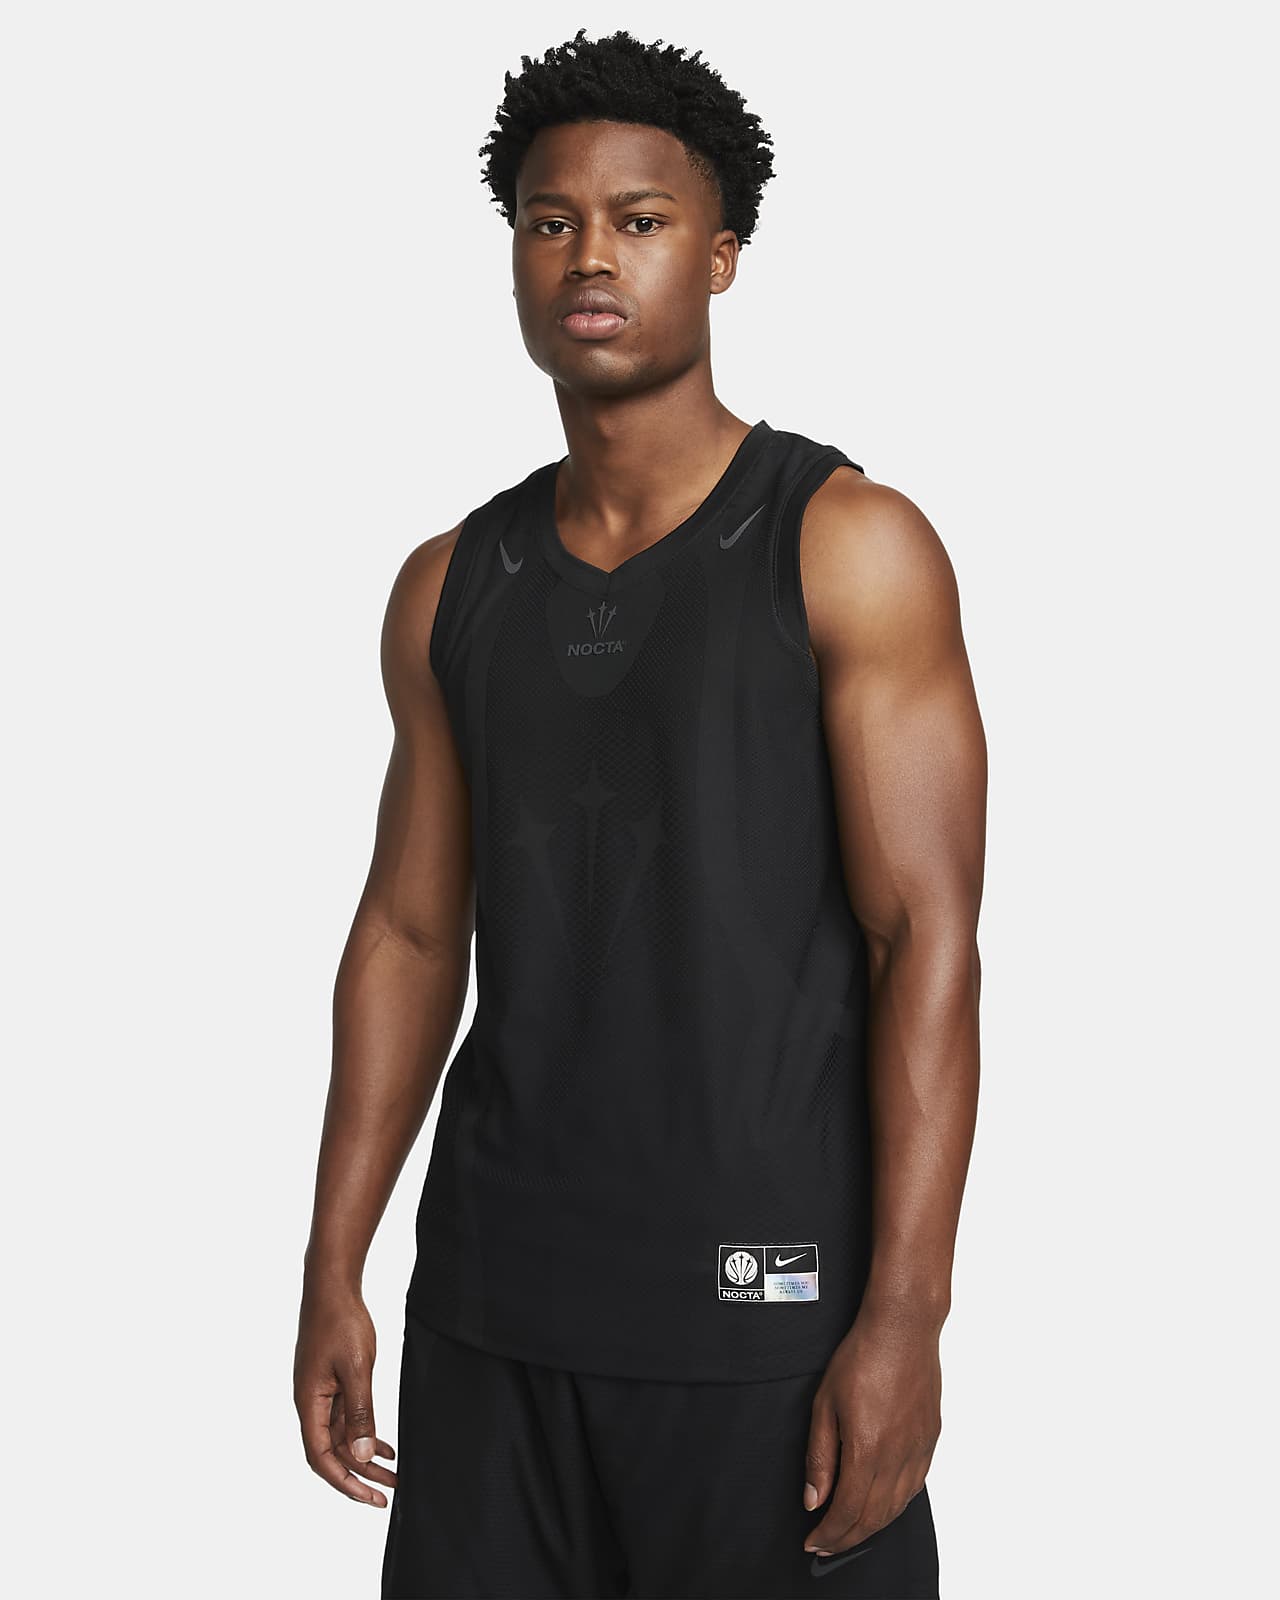 Verminderen Hymne Wonen NOCTA Men's Basketball Jersey. Nike.com